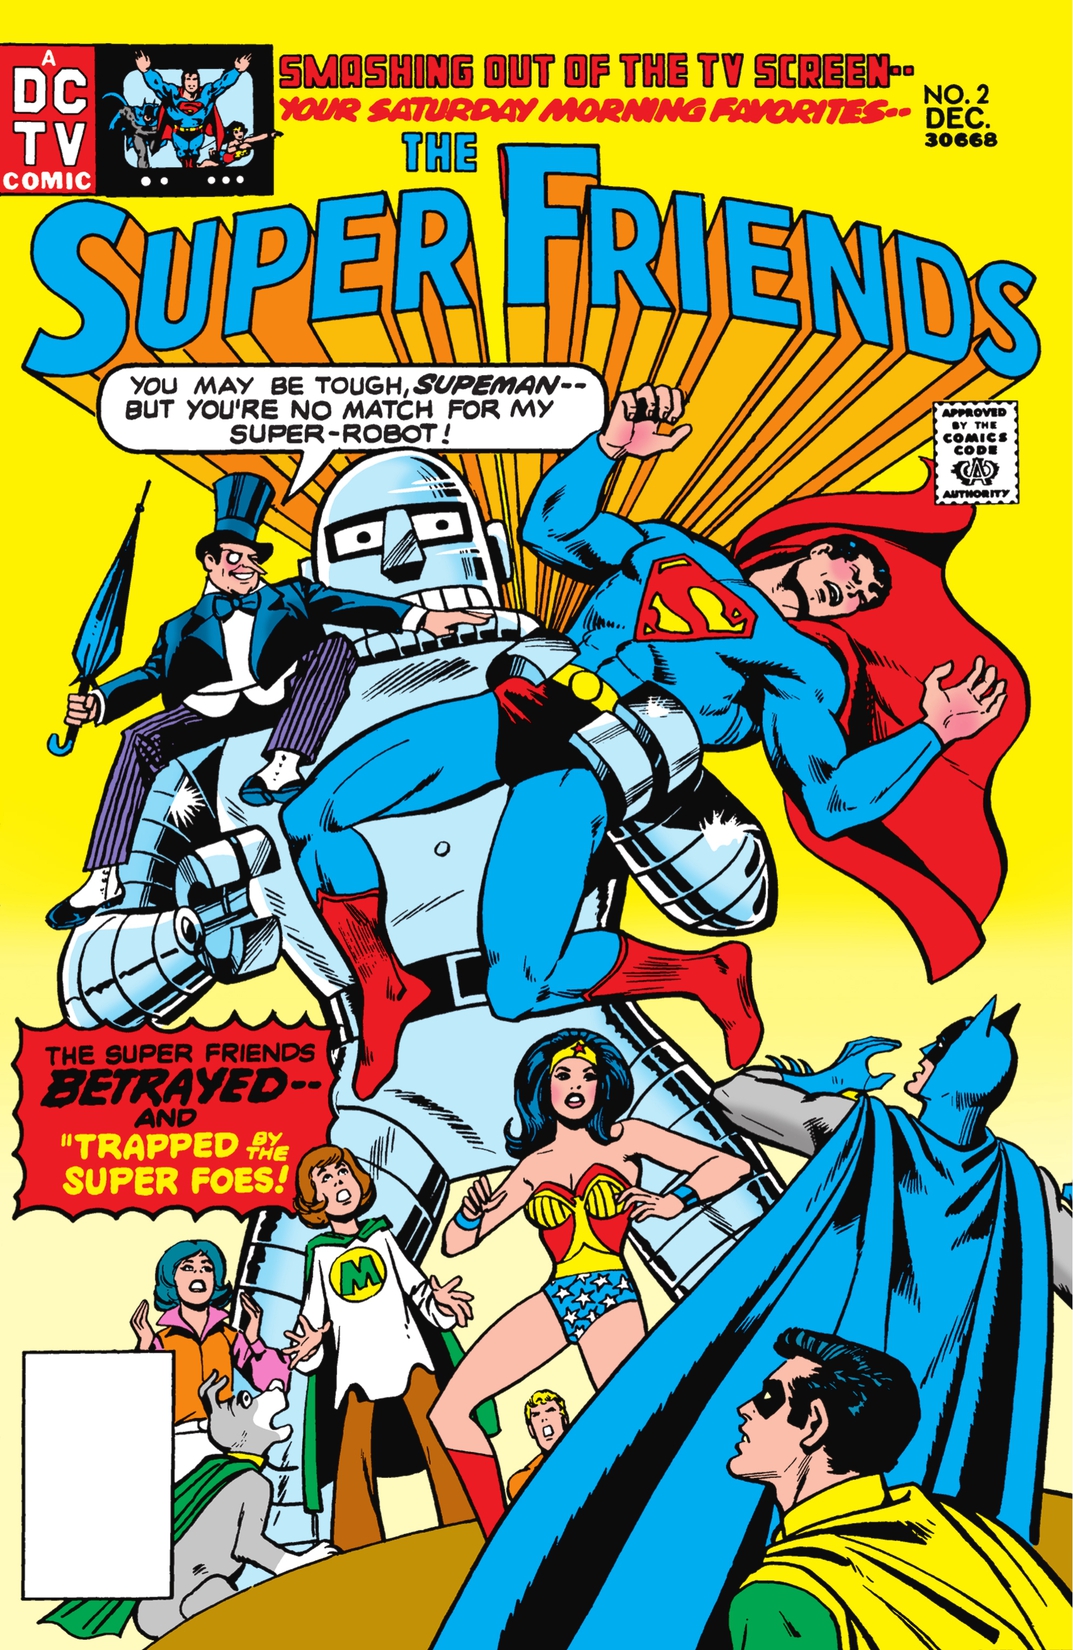 Super Friends (1976-) #2 preview images